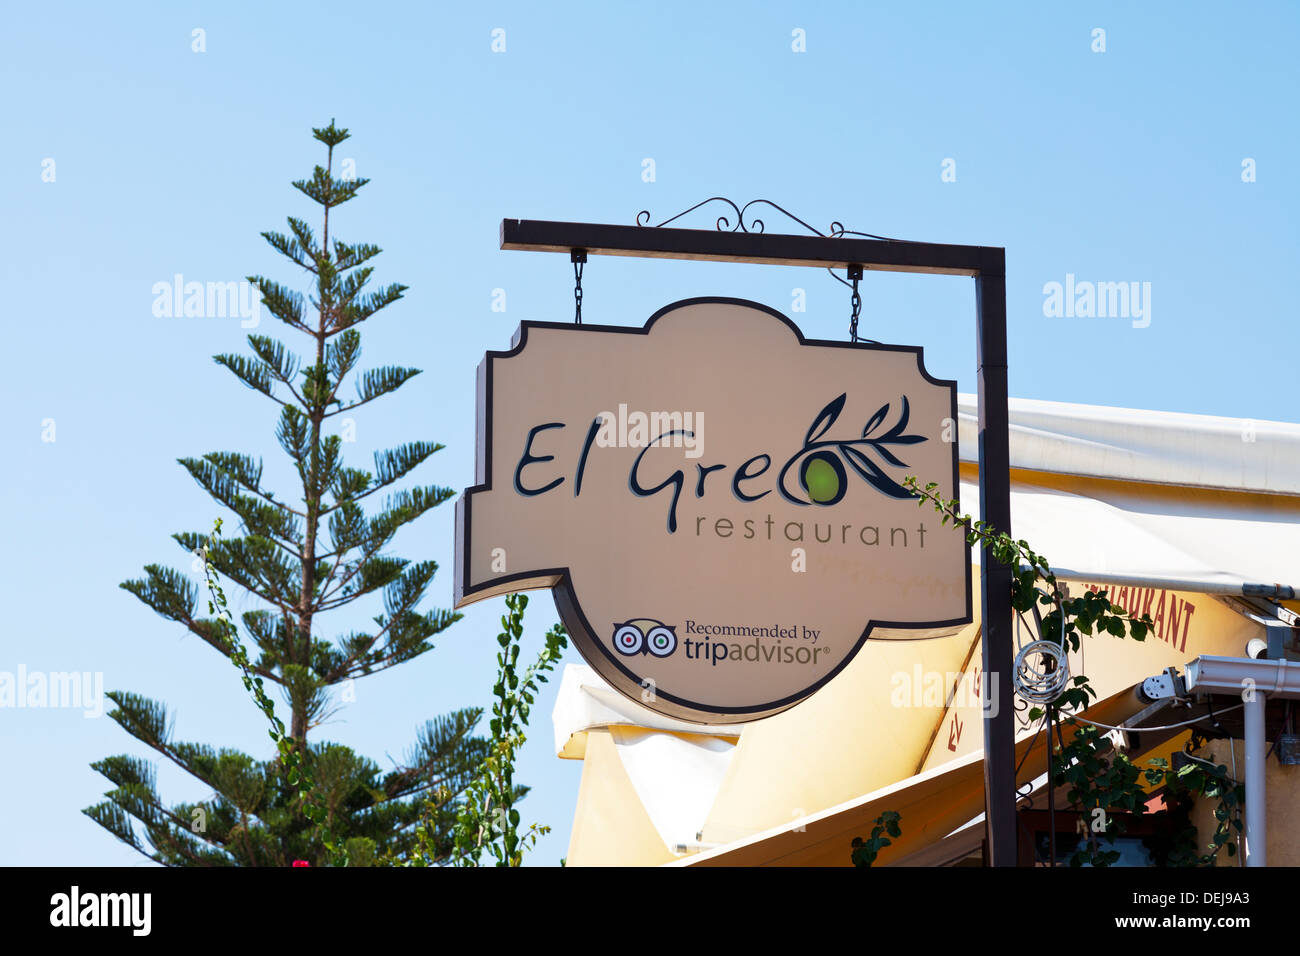 El Greko Restaurant in Nidri Lefkas Lefkada Greek Island Greece recommended by trip advisor sign Nydri Stock Photo